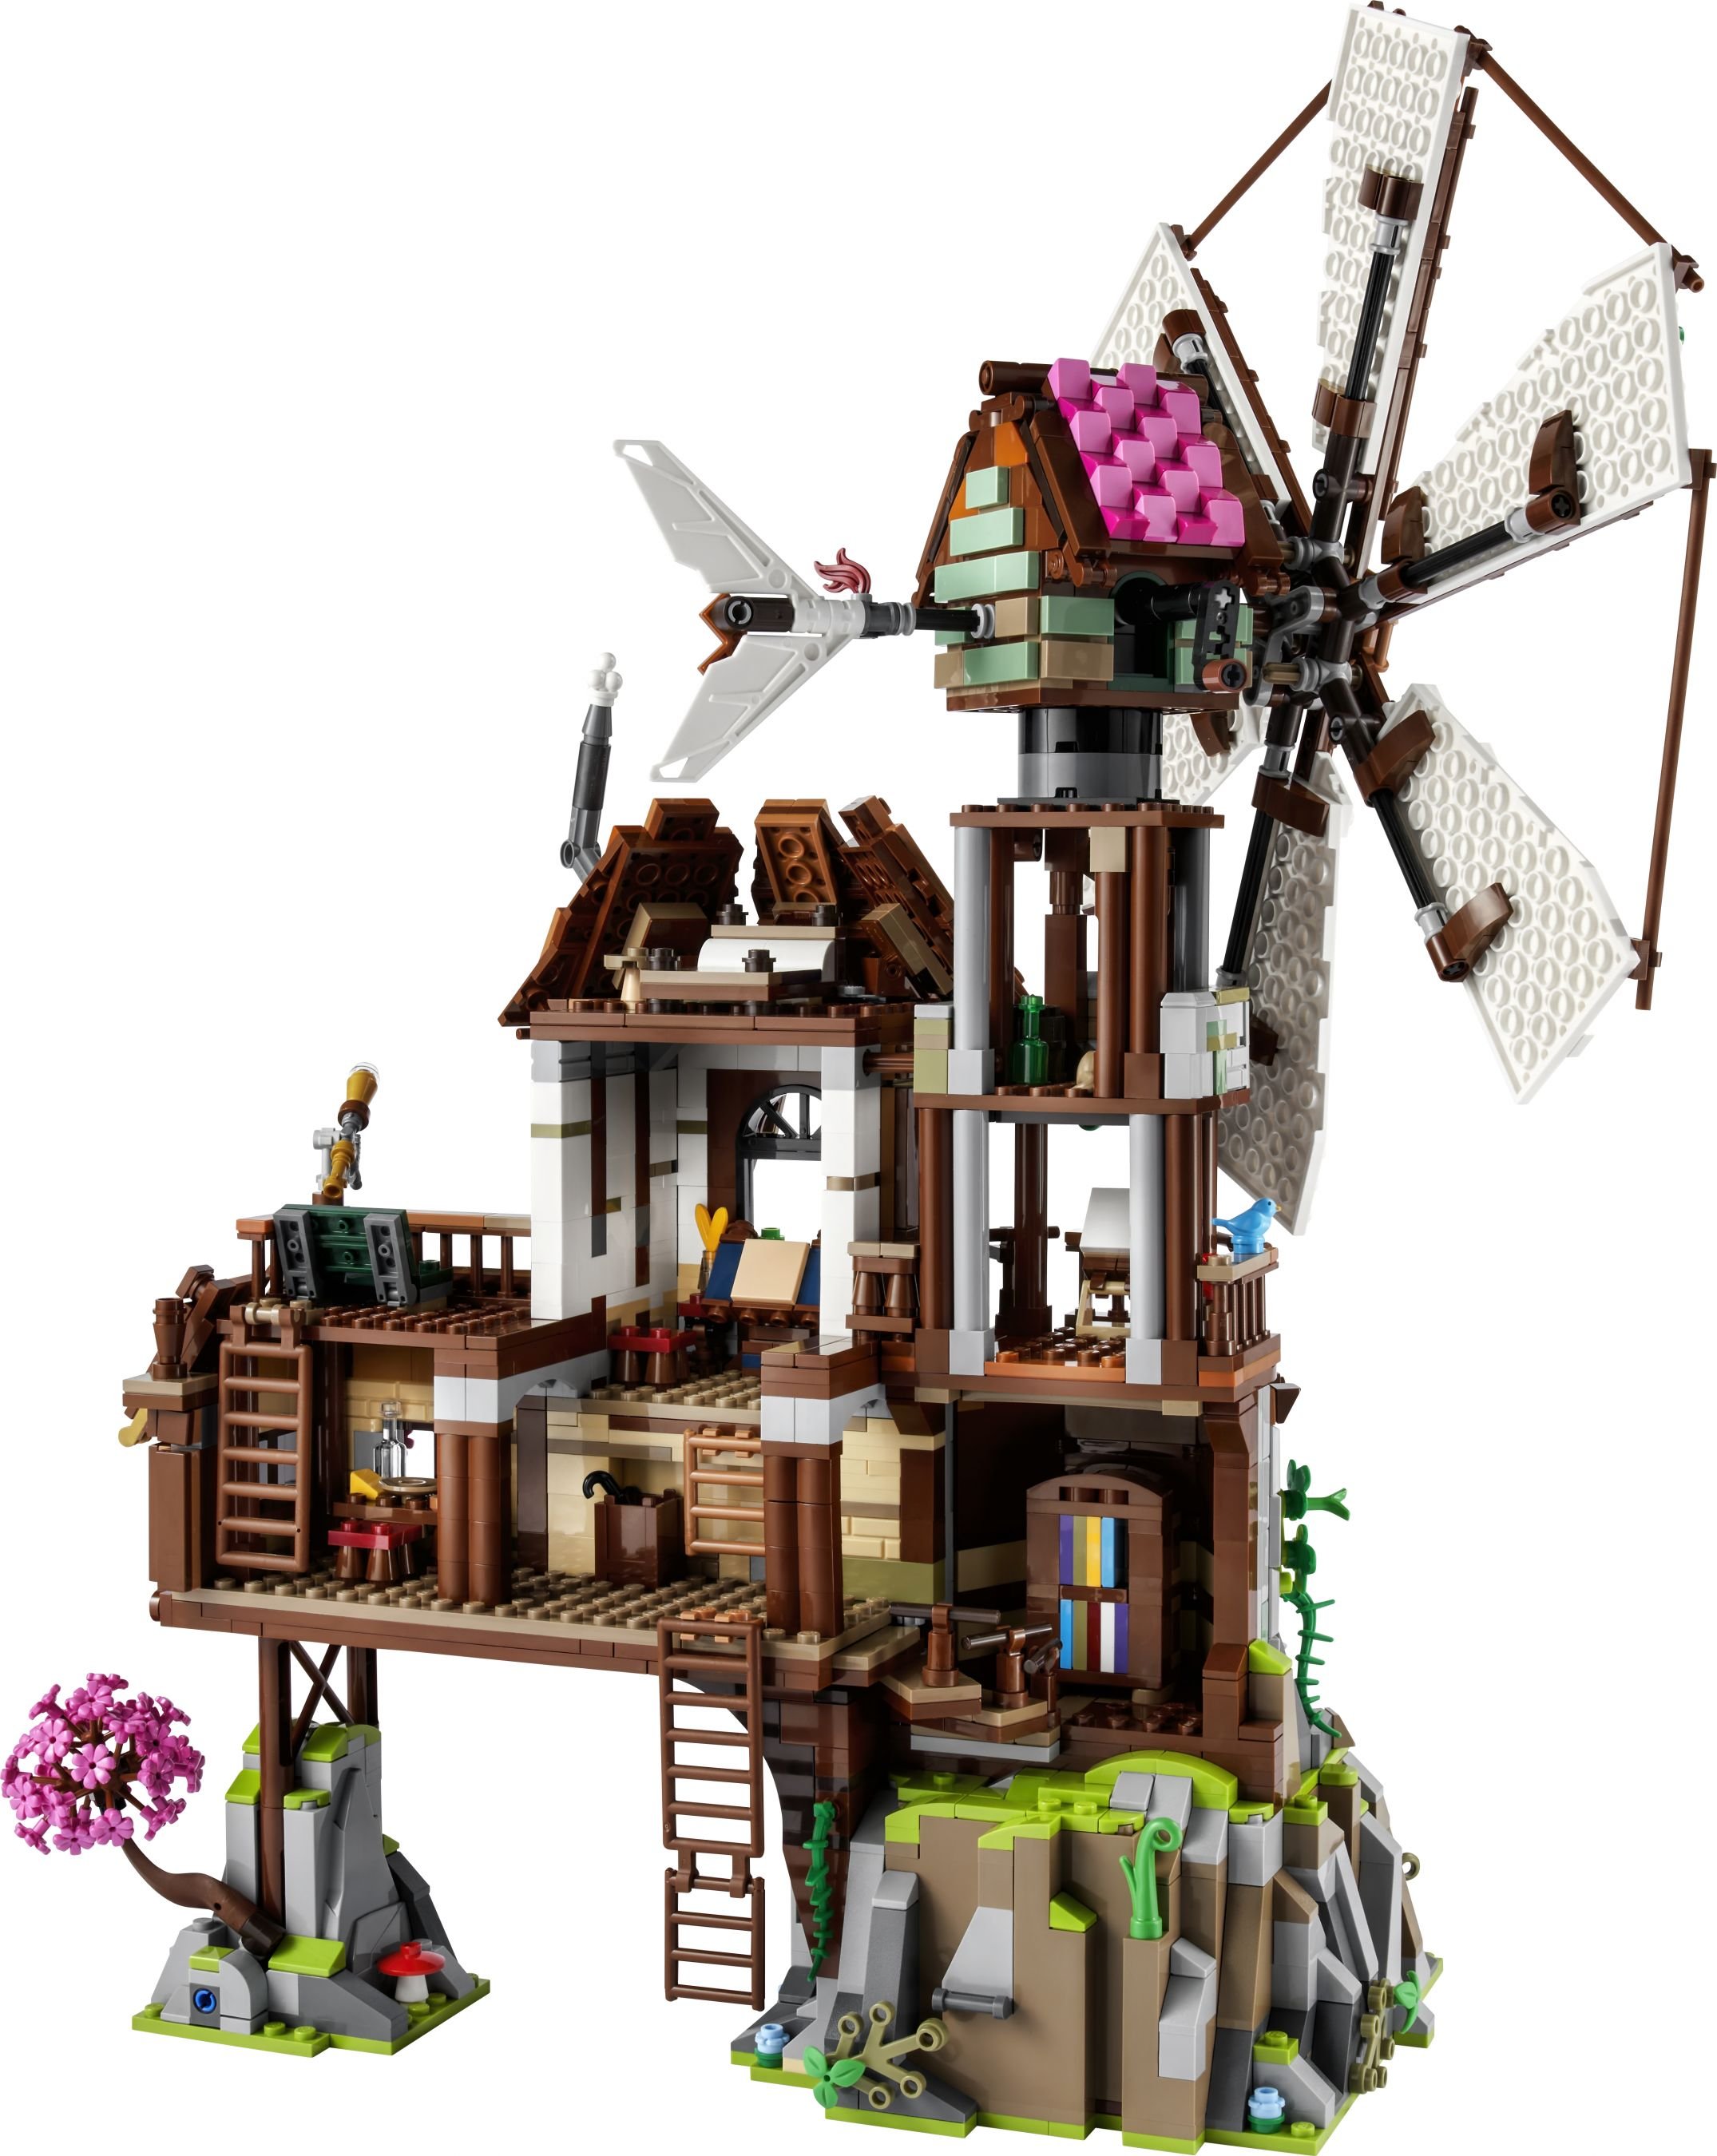 LEGO Bricklink 910003 Windmühle auf dem Berg LEGO_910003_back_01.jpg